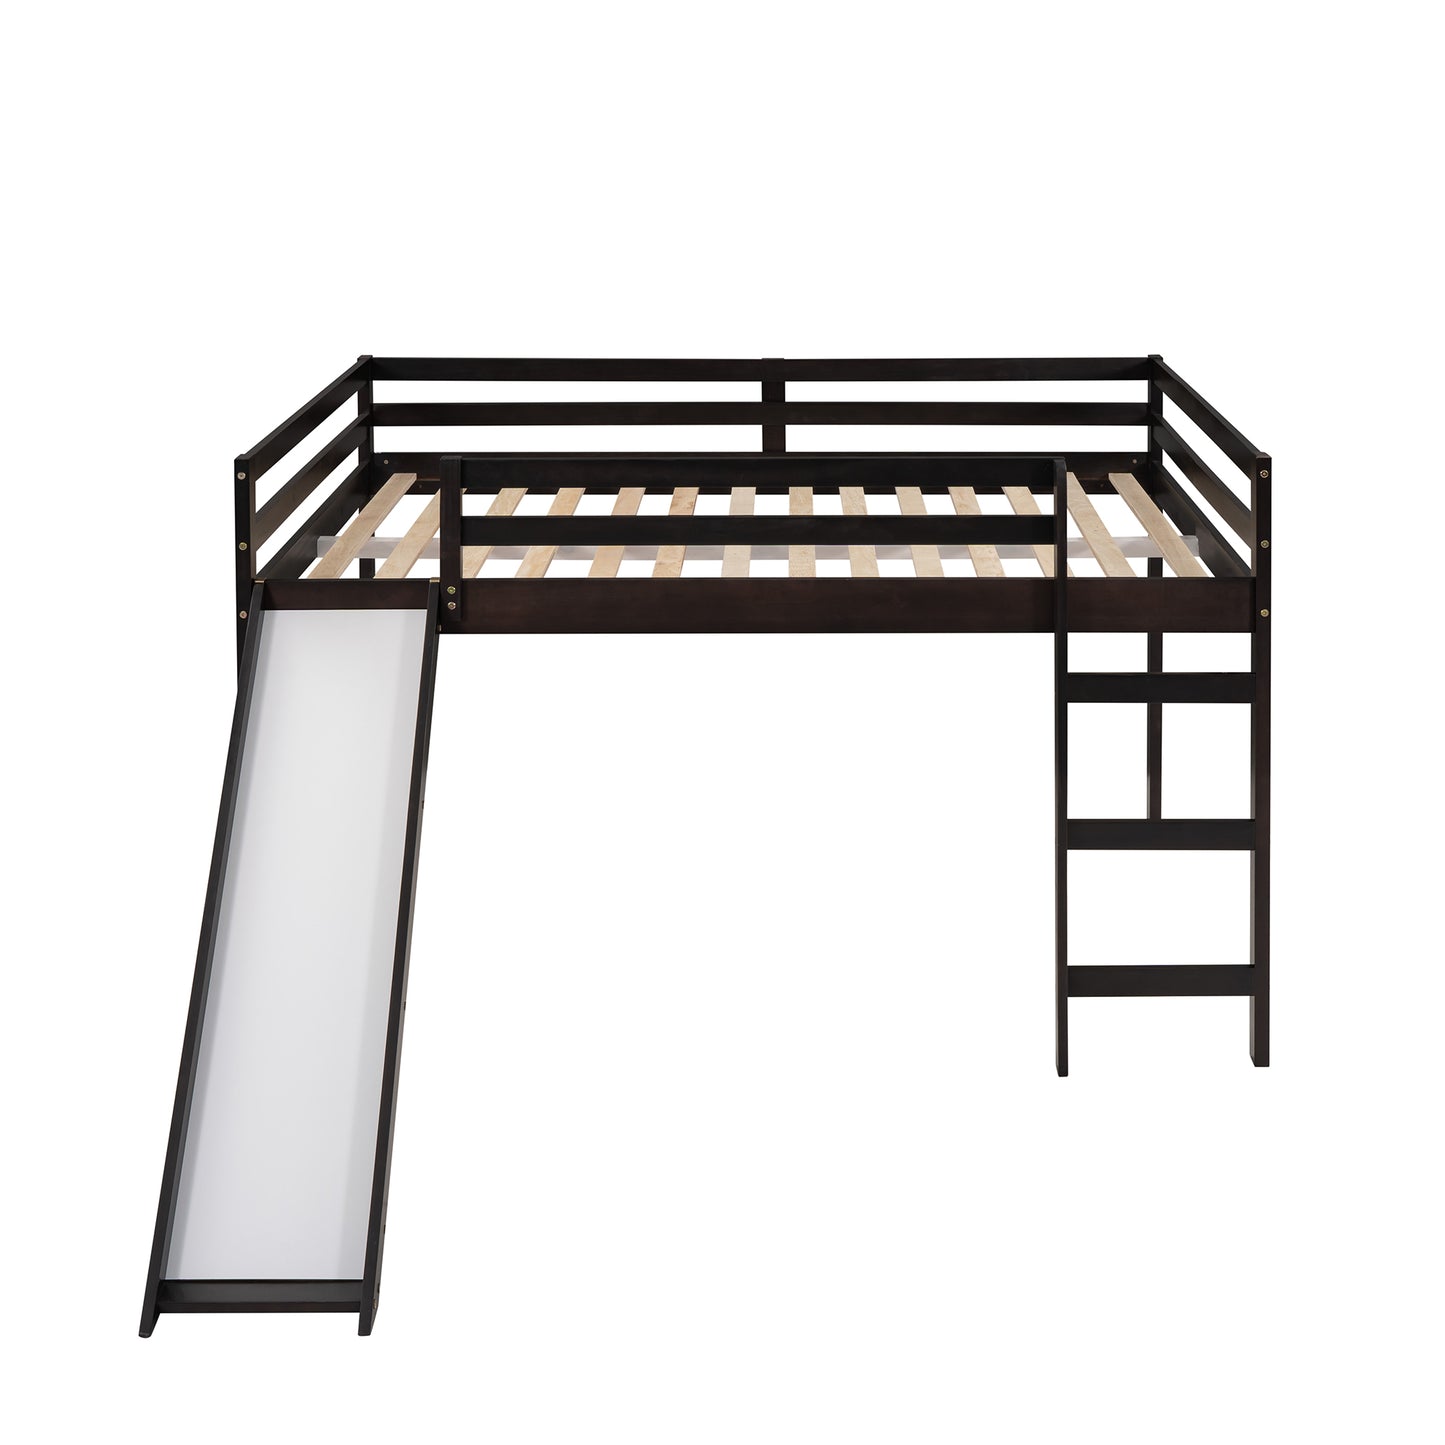 Loft Bed with Slide, Multifunctional Design, Full